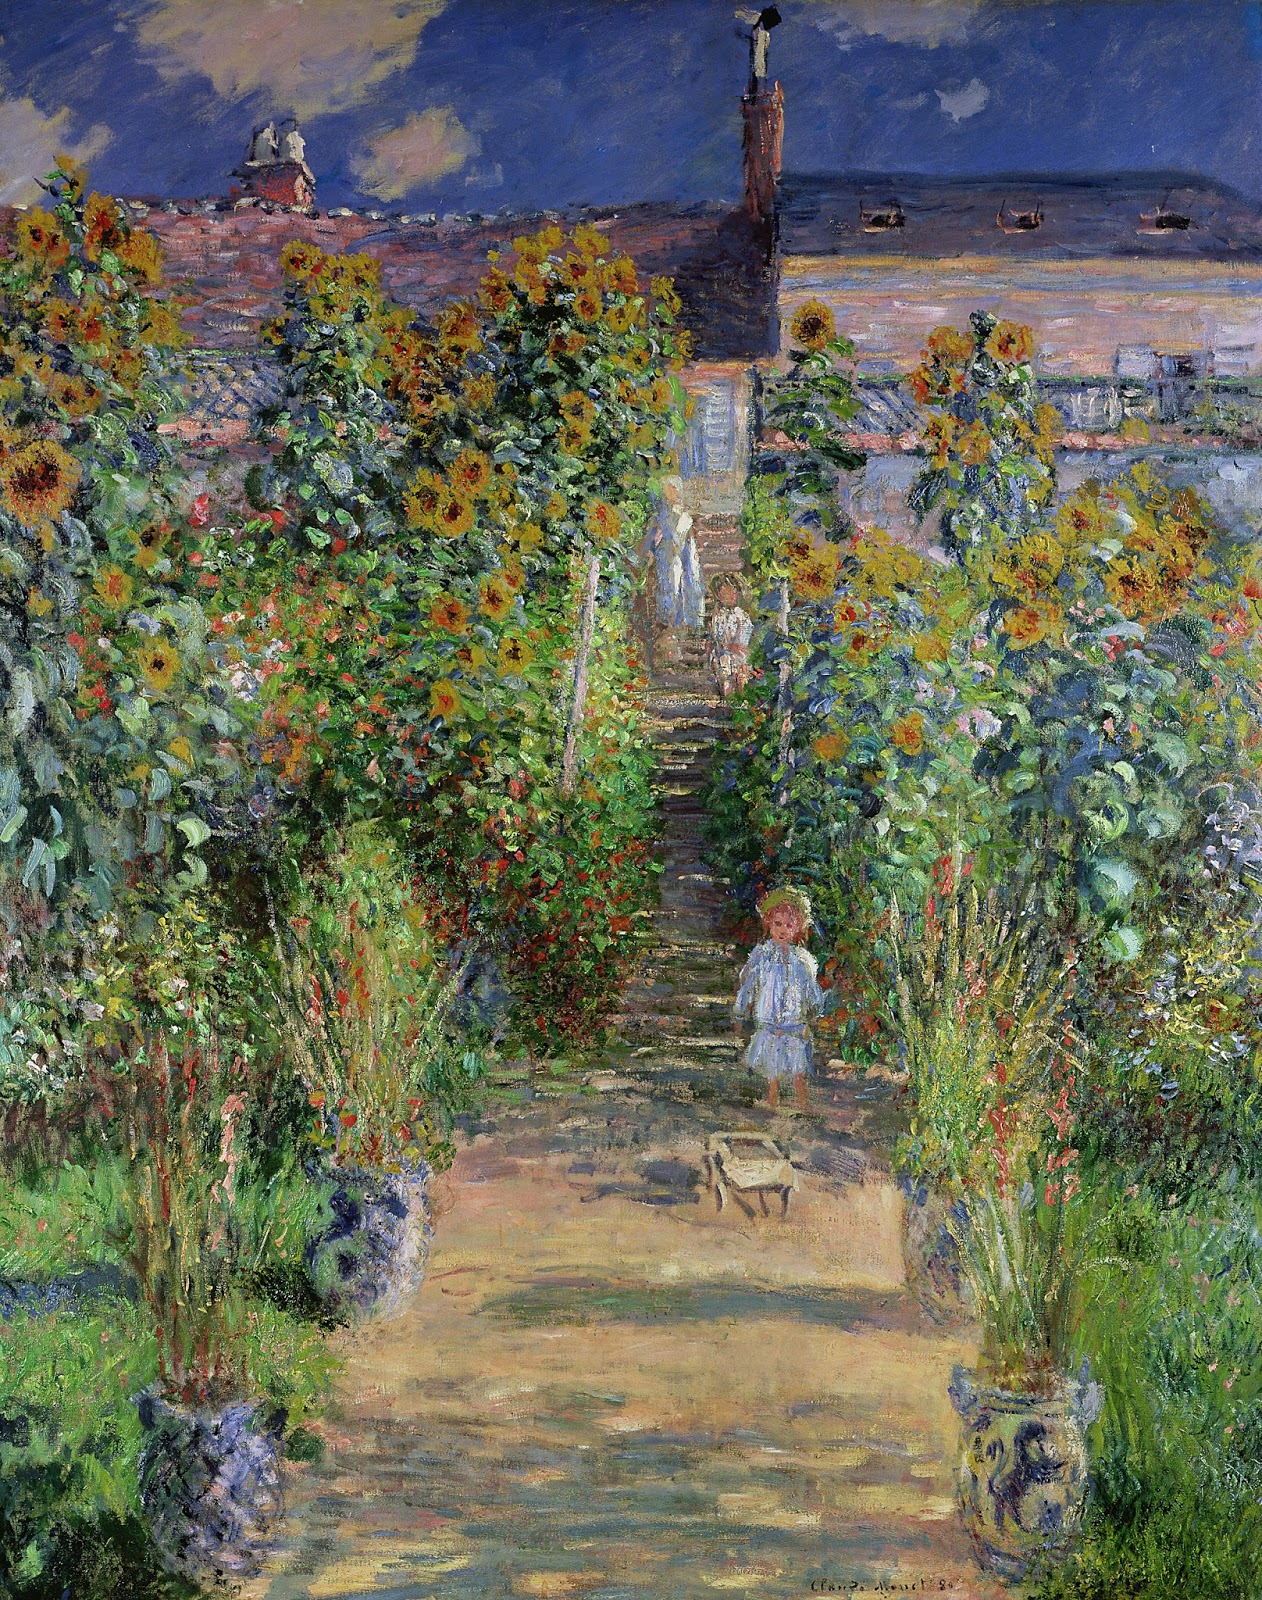 Claude+Monet-1840-1926 (533).jpg